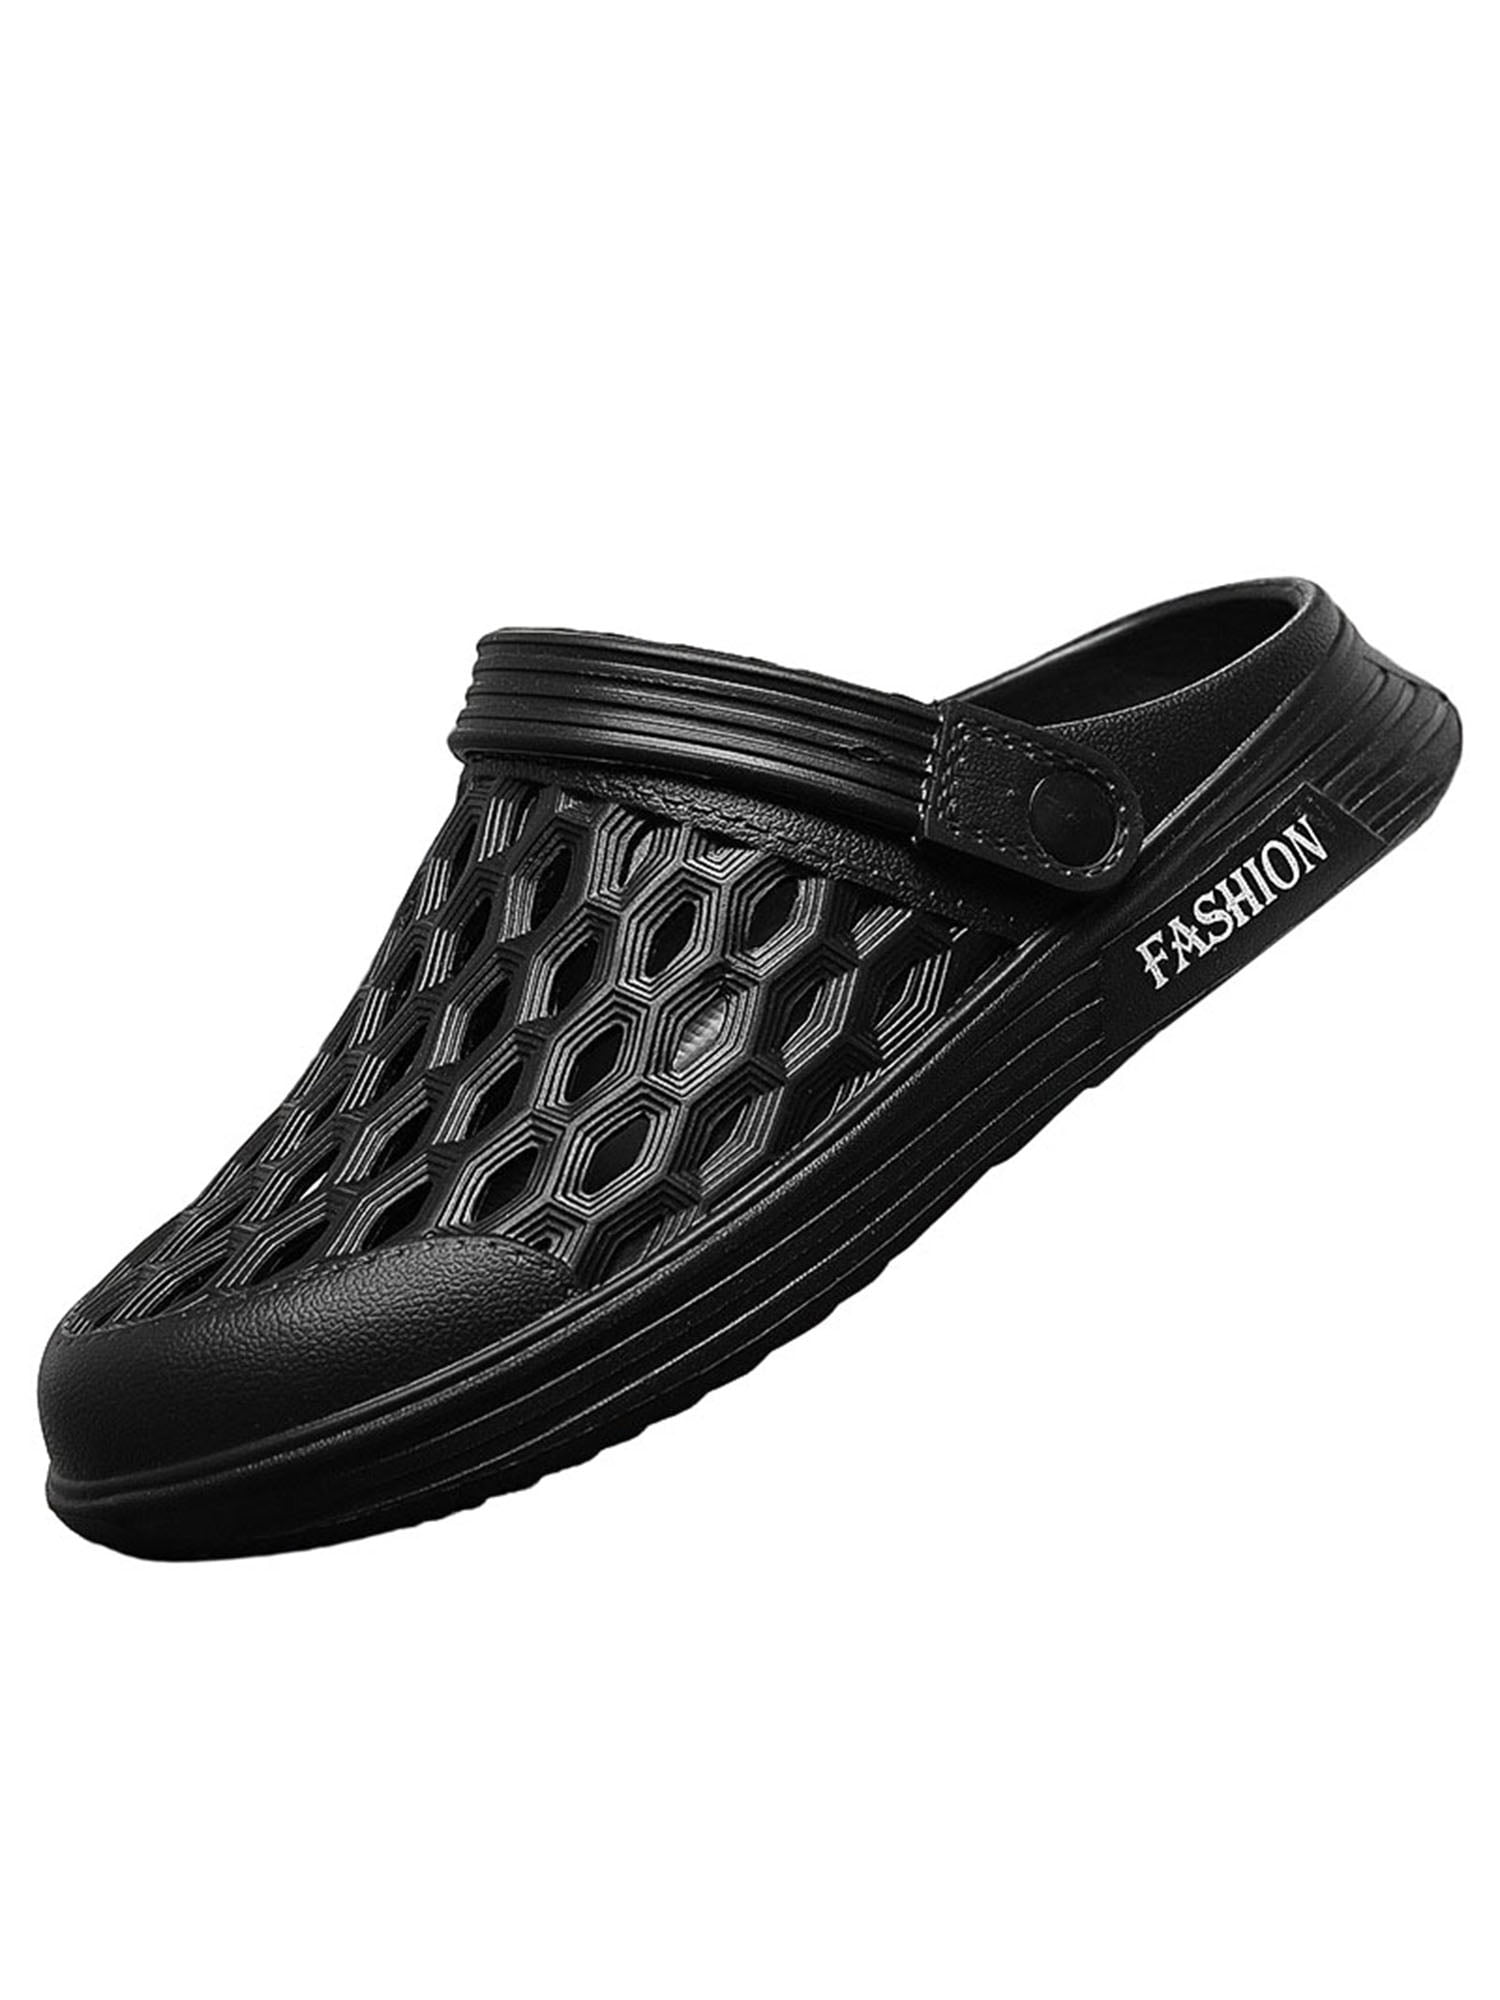 Avamo Men Sandals Holes Casual Beach Slip On Non-Slip Shoes Wear ...